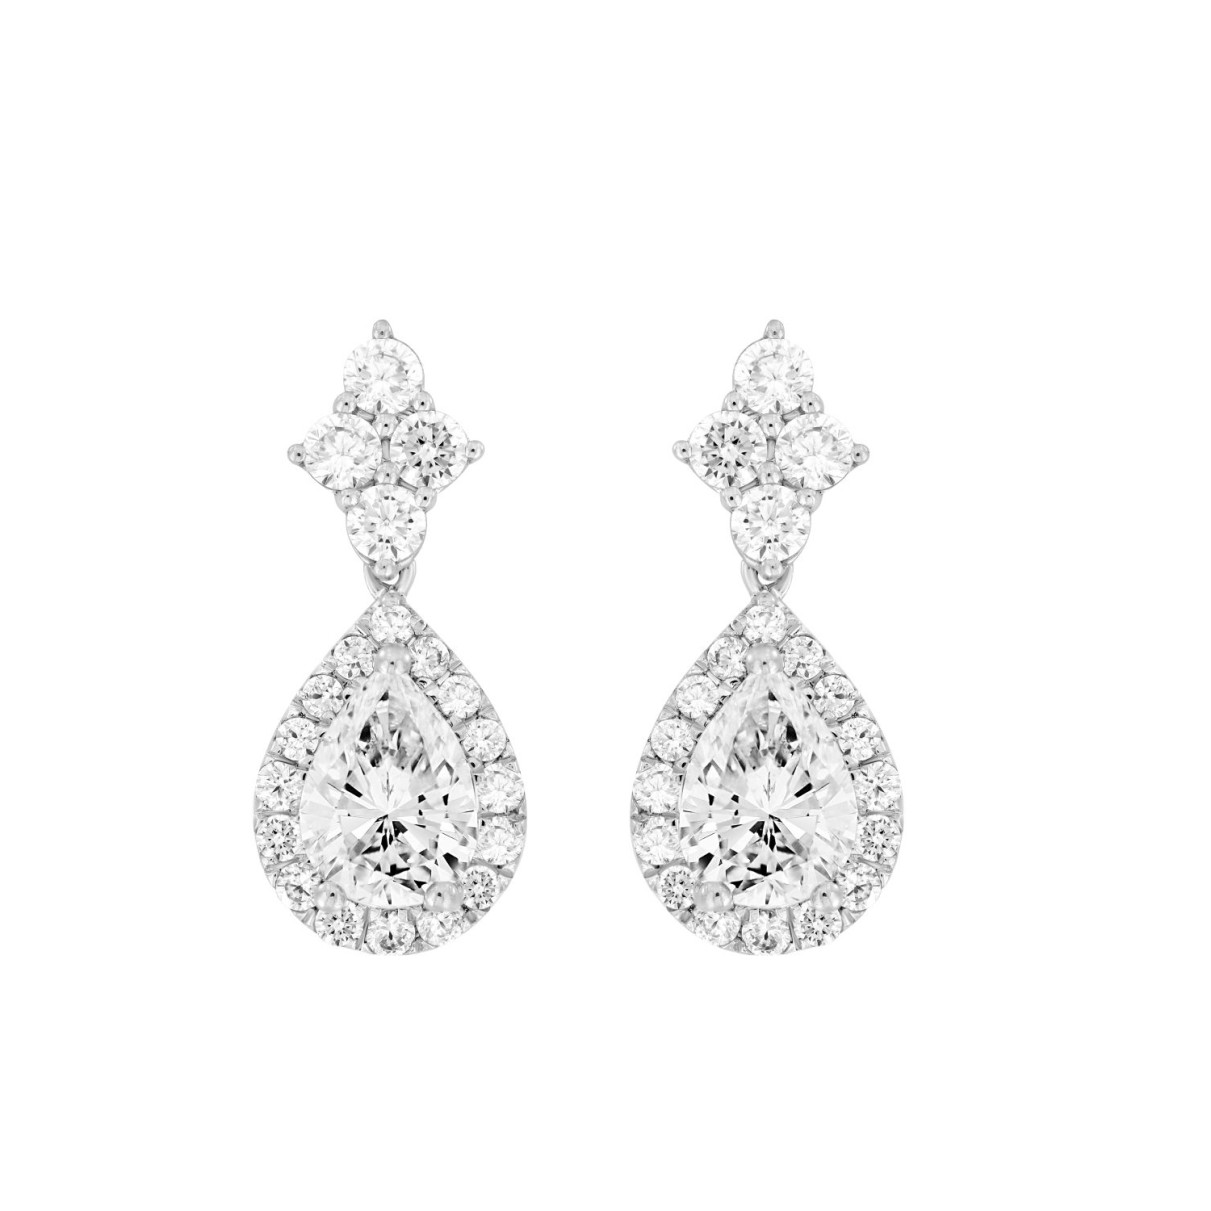 LADIES EARRINGS 3 1/4CT ROUND/PEAR DIAMOND 14K WHITE GOLD (CENTER STONE PEAR DIAMOND 2CT )